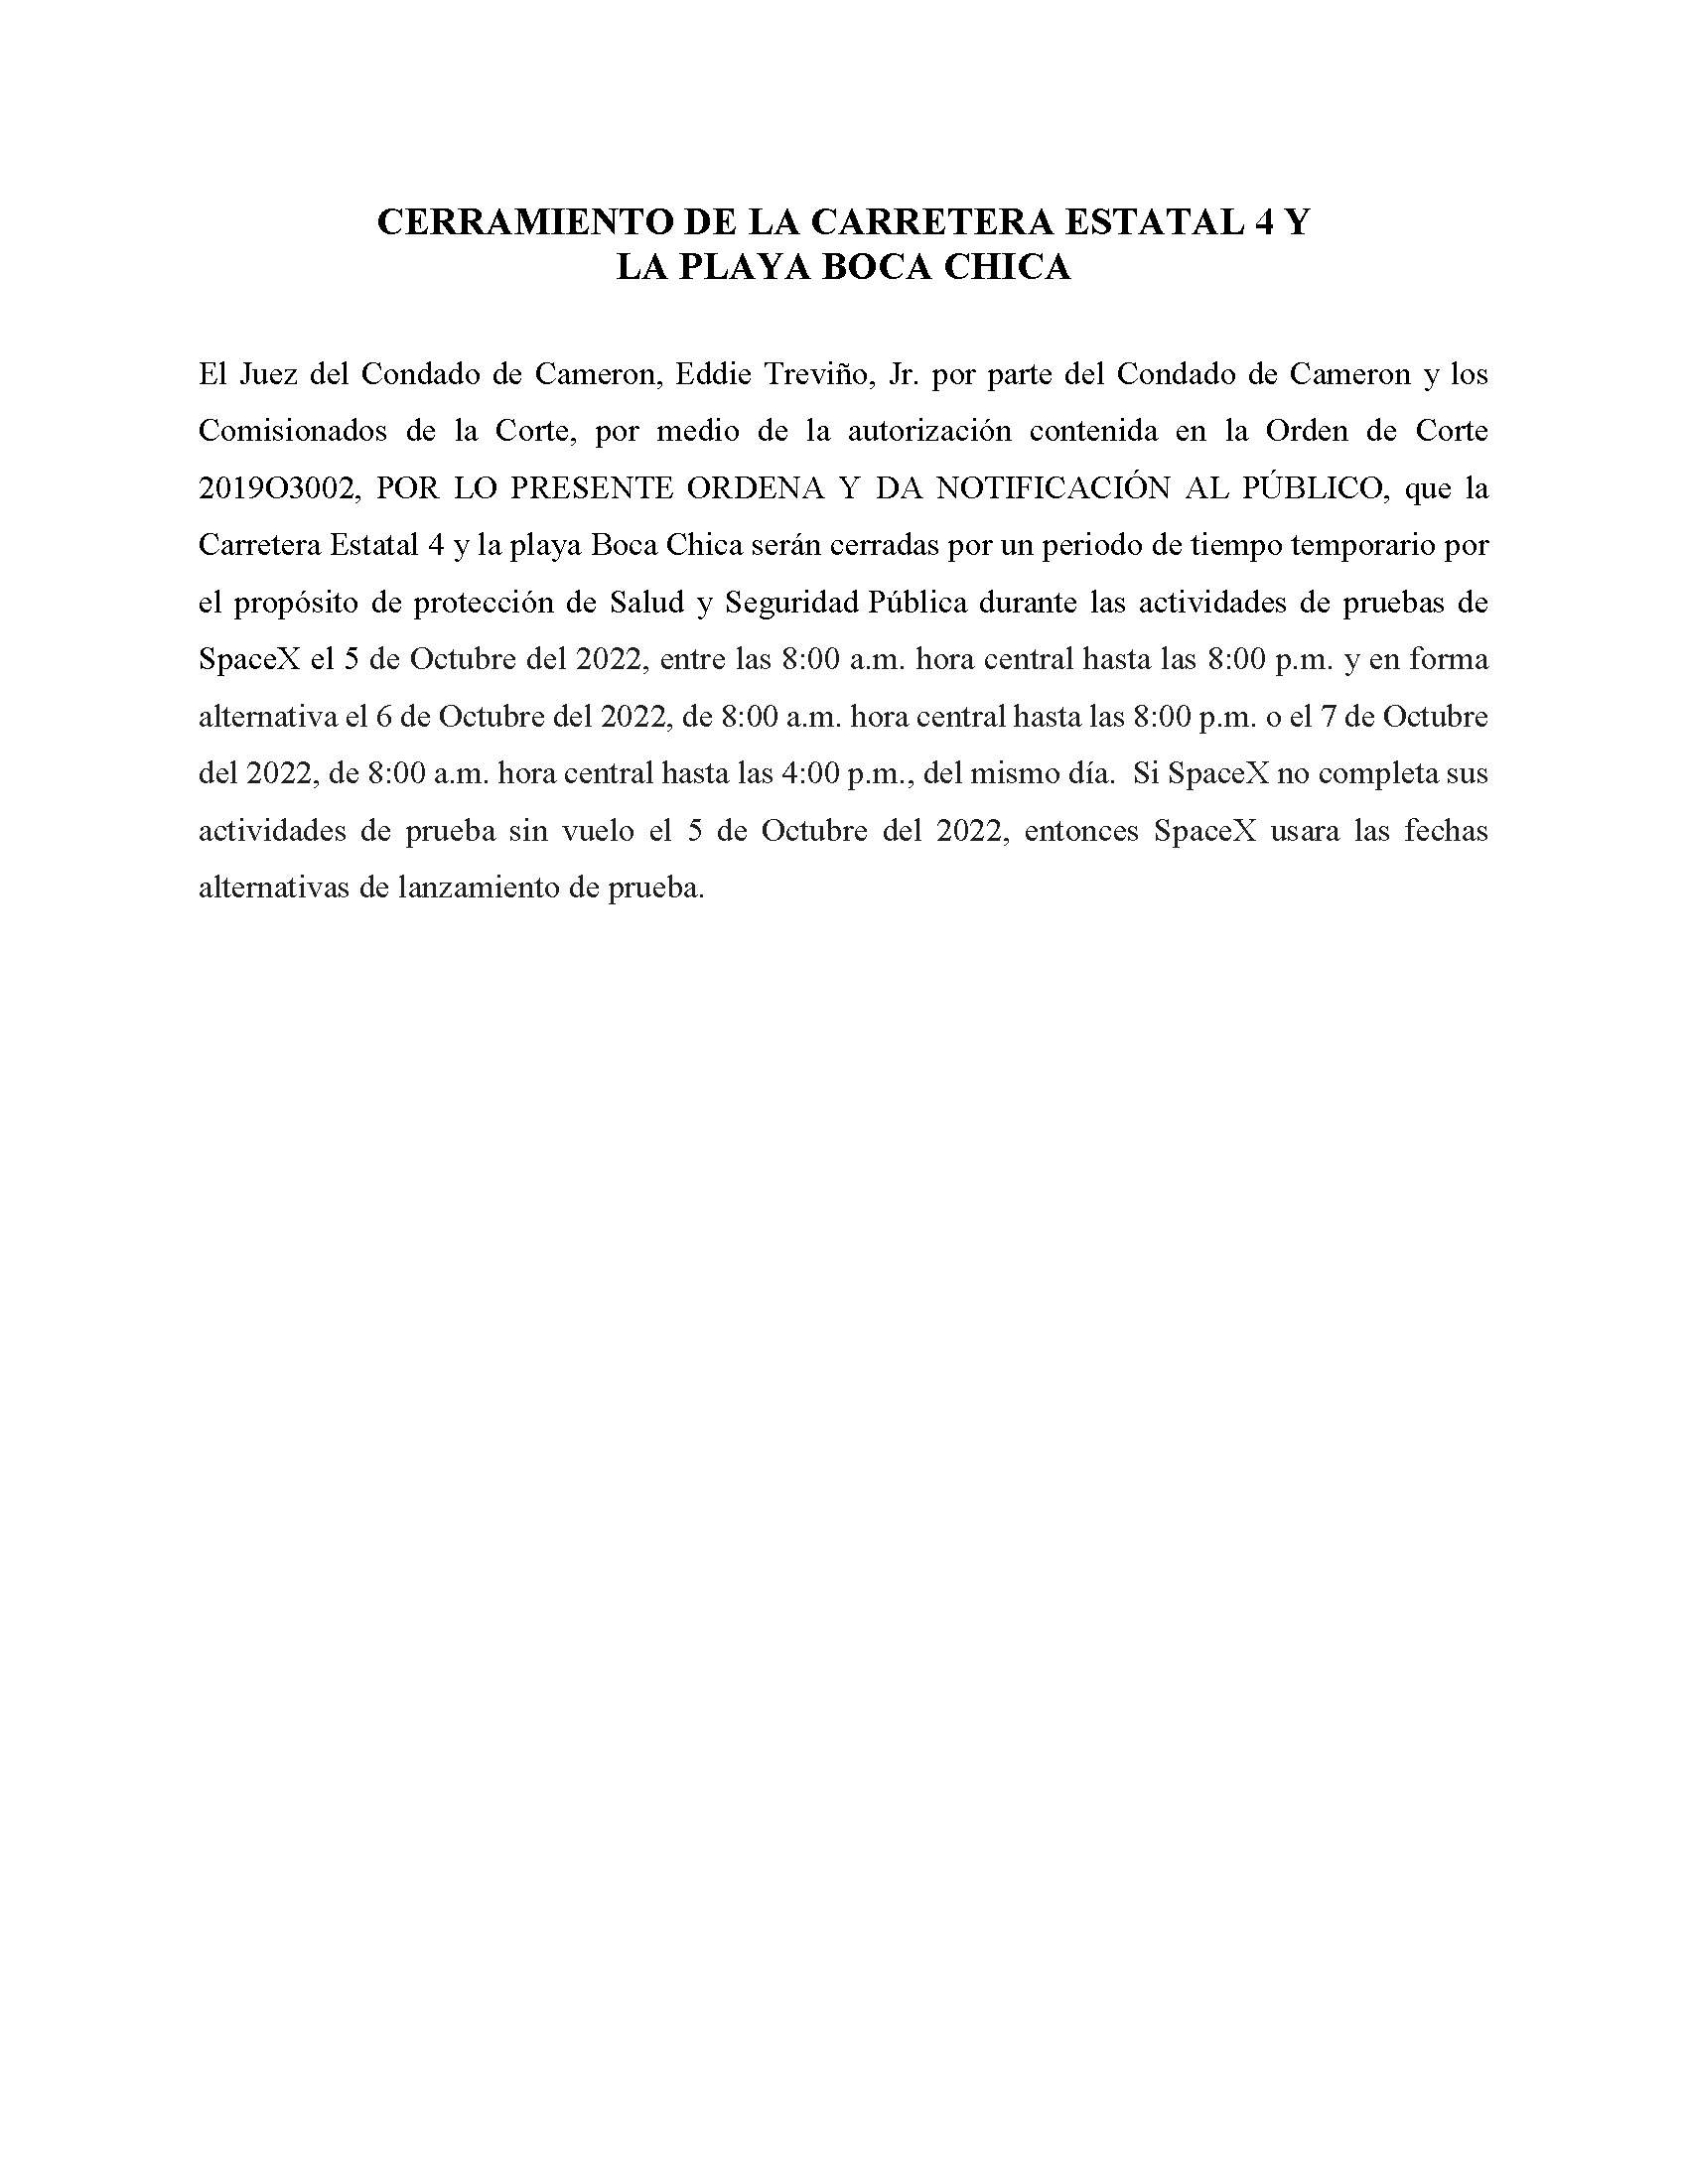 ORDER.CLOSURE OF HIGHWAY 4 Y LA PLAYA BOCA CHICA.SPANISH.10.05.2022